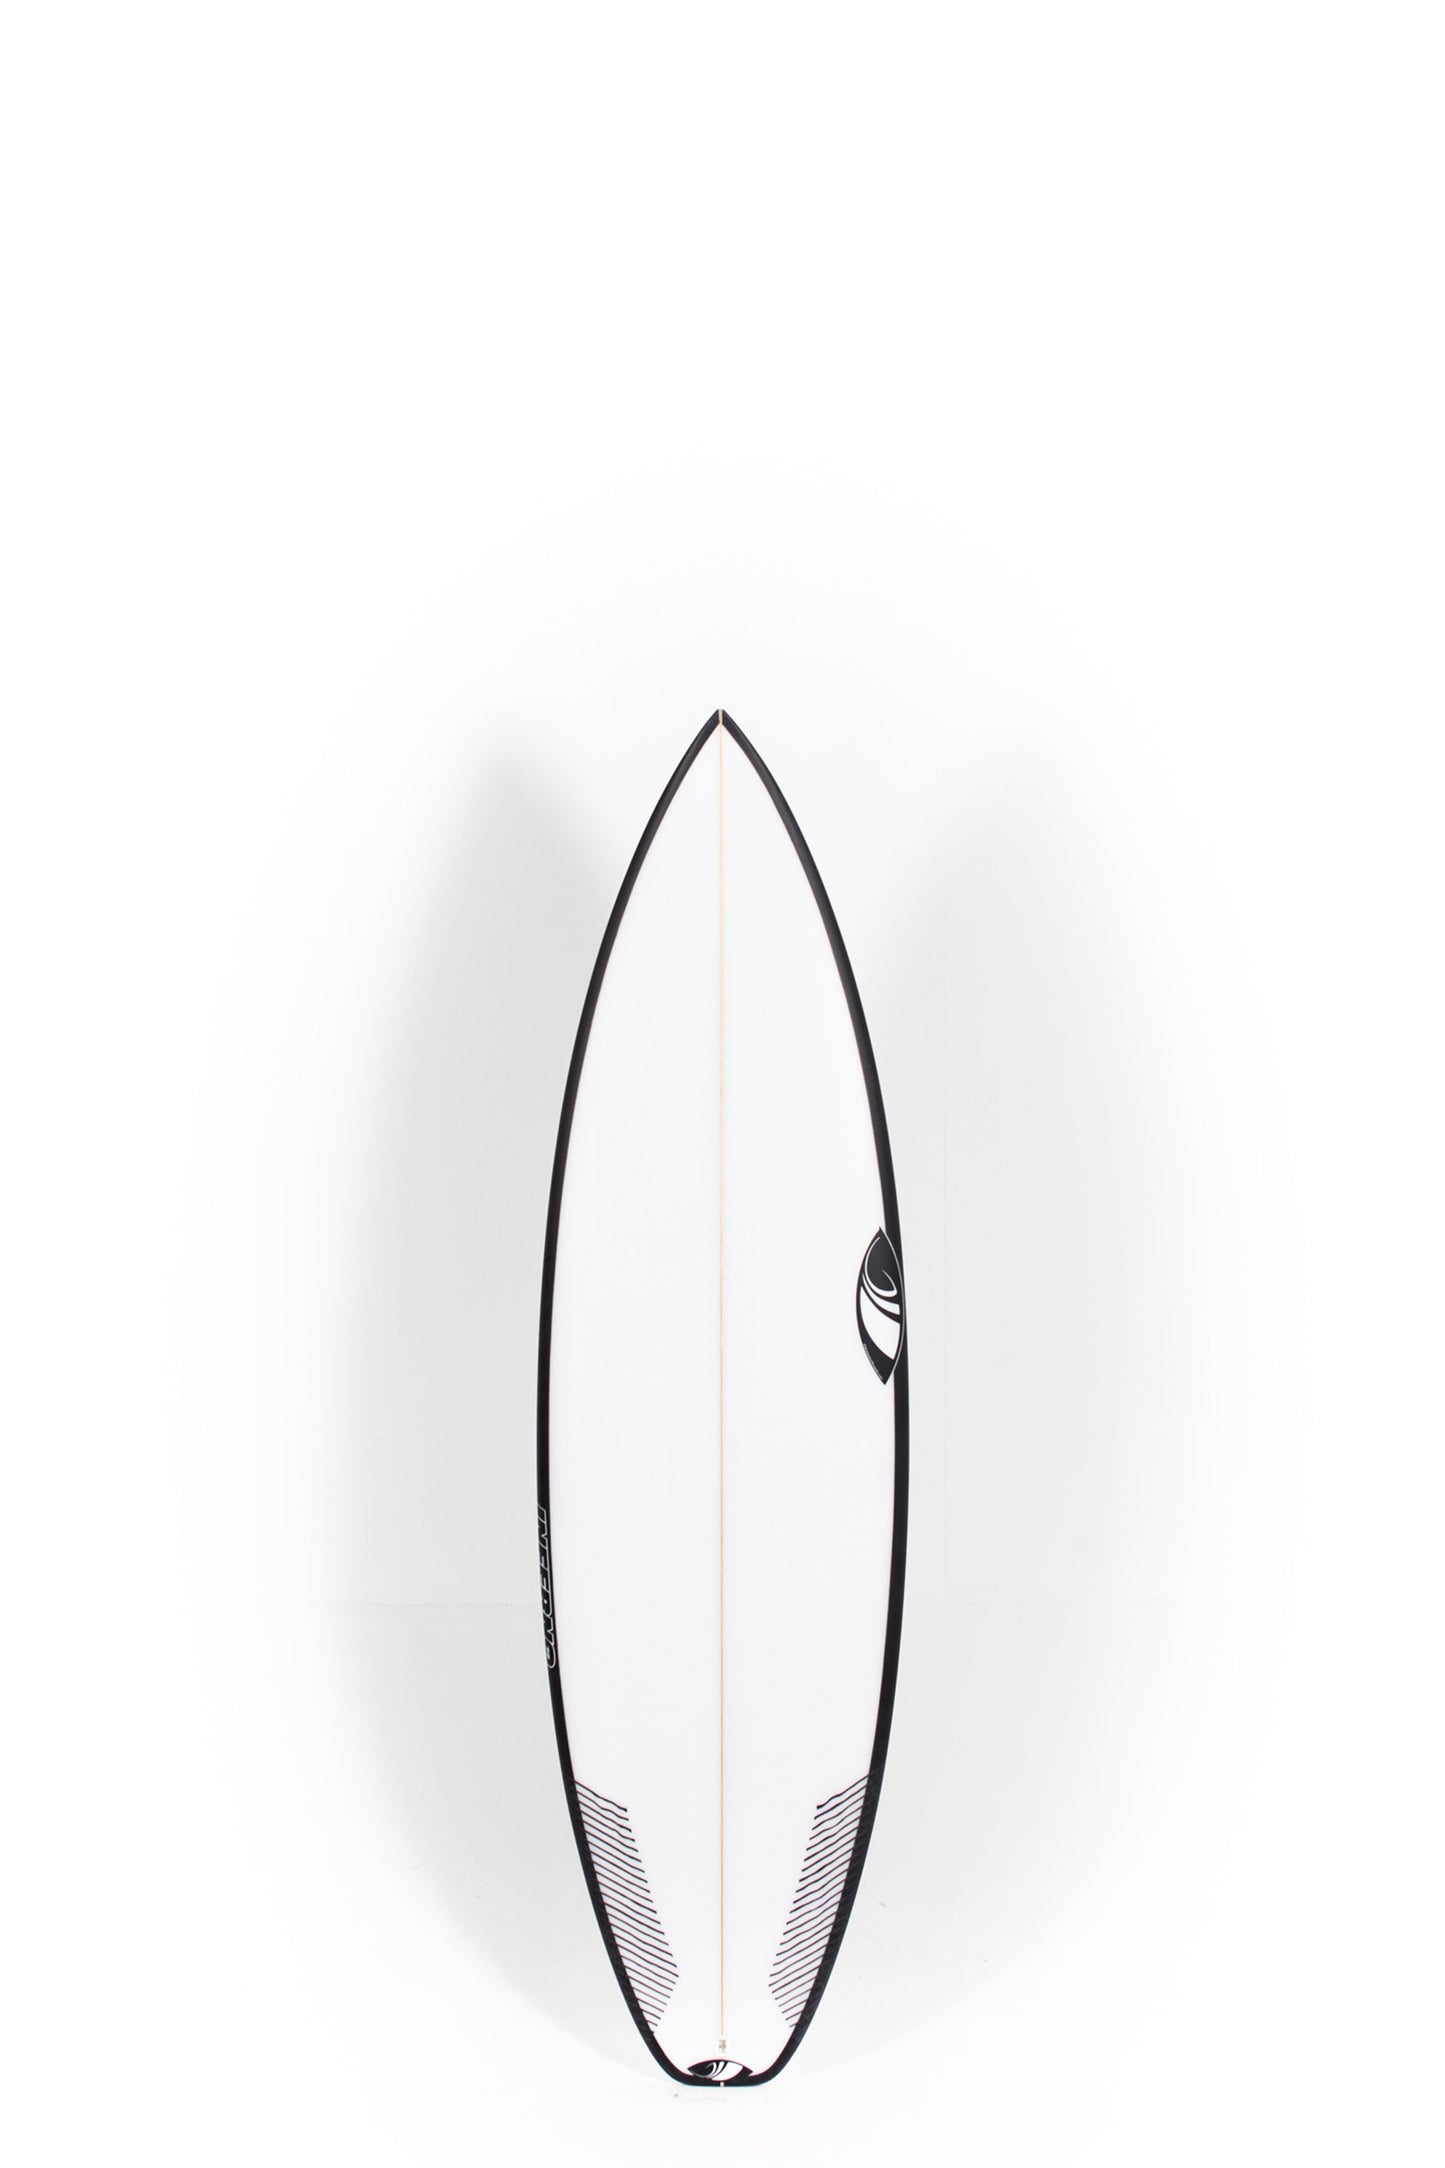 Pukas Surf Shop - Sharpeye Surfboards - INFERNO 72 PRO by Marcio Zouvi - 5'11" x 19 1/4 x 2 1/2 - 28.9L - INFERNOPRO